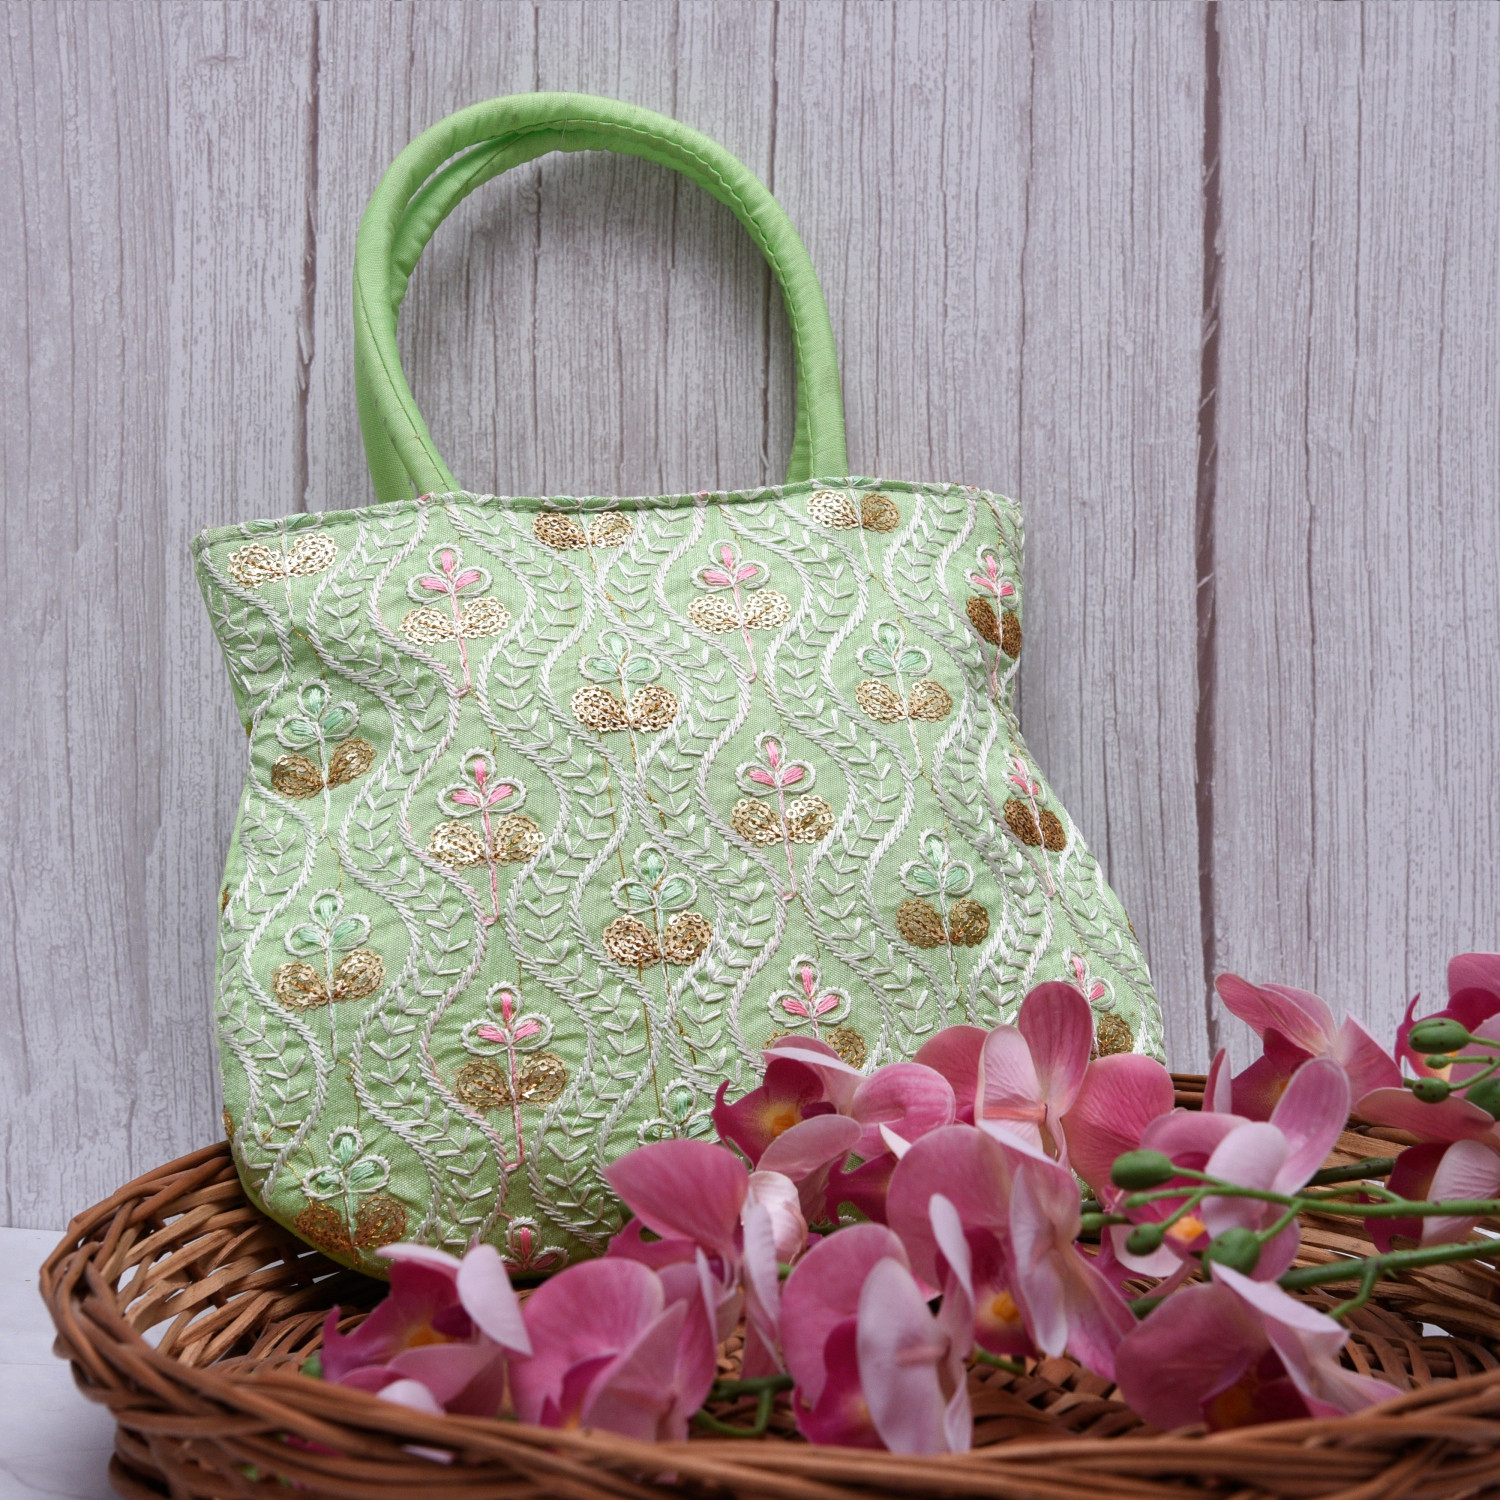 Kuber Industries Hand Bag | Traditional Hand Bag | Silk Wallet Hand Bag | Woman Tote Hand Bag | Ladies Purse Handbag | Gifts Hand Bag | Curved Shape Embroidery Hand Bag | Pack of 3 | Multi